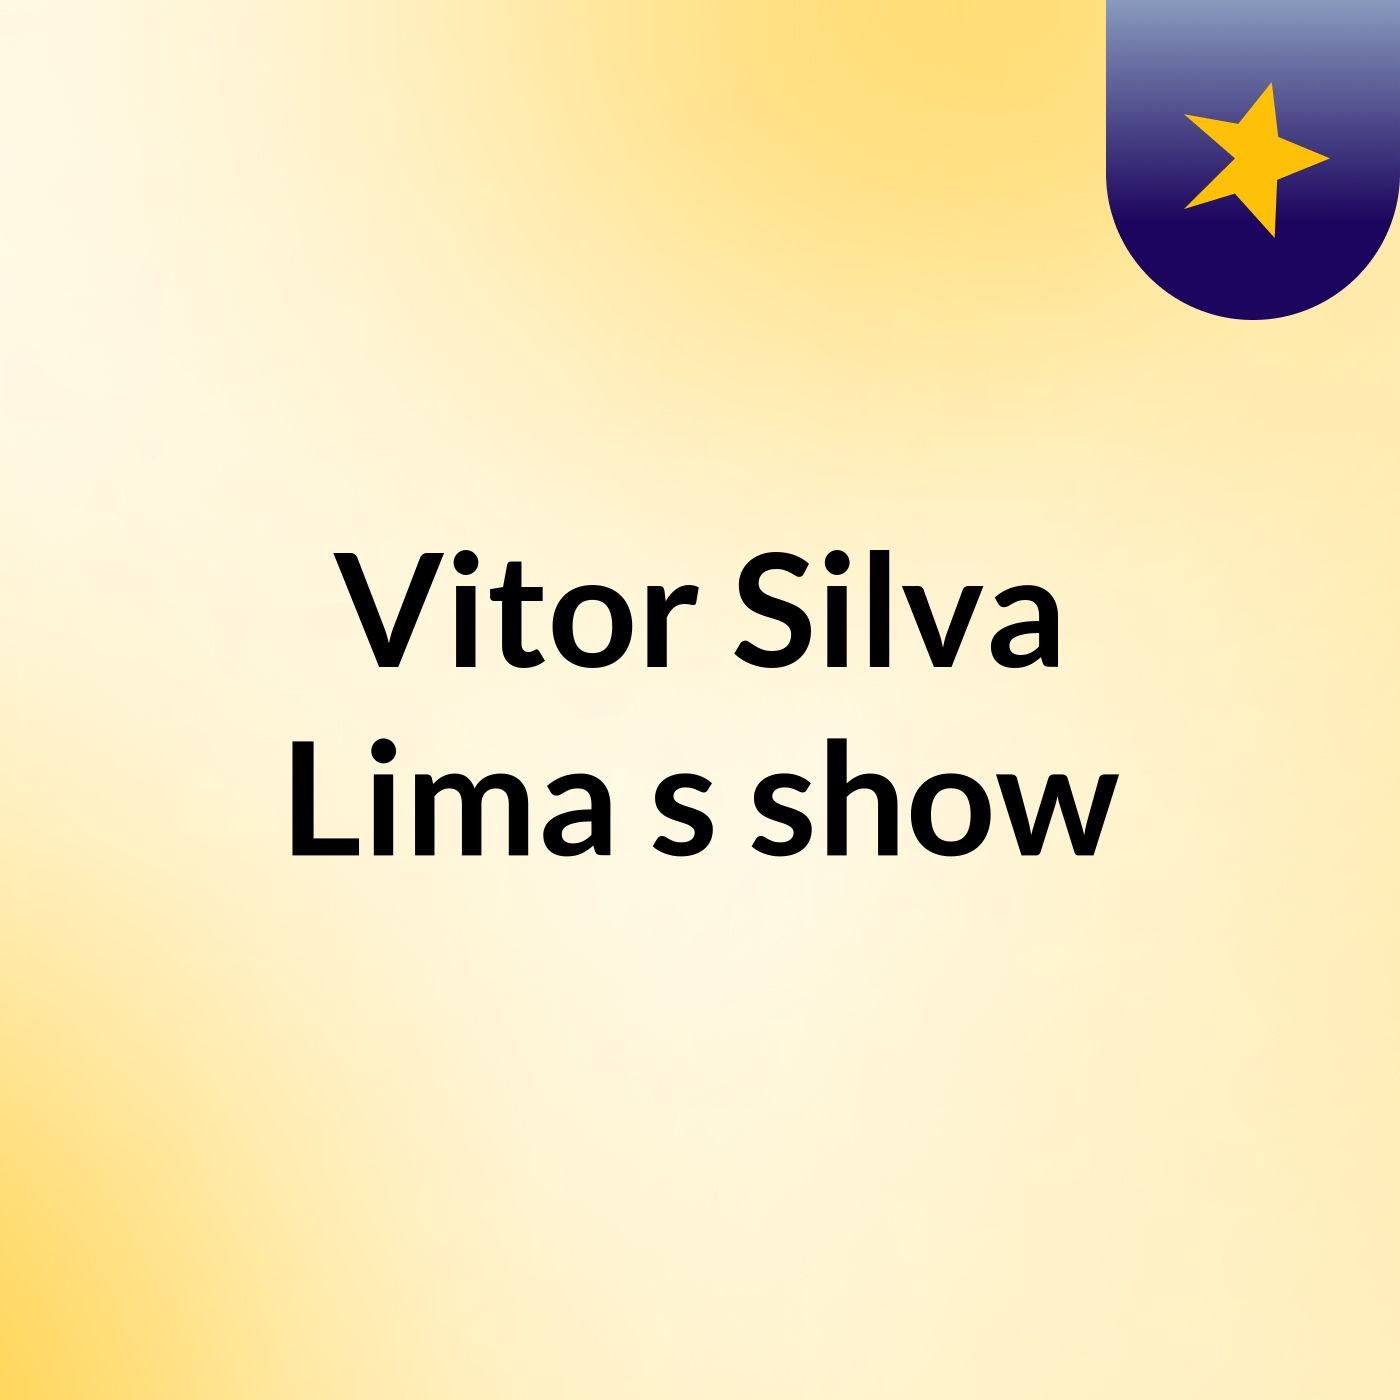 Vitor Silva Lima's show